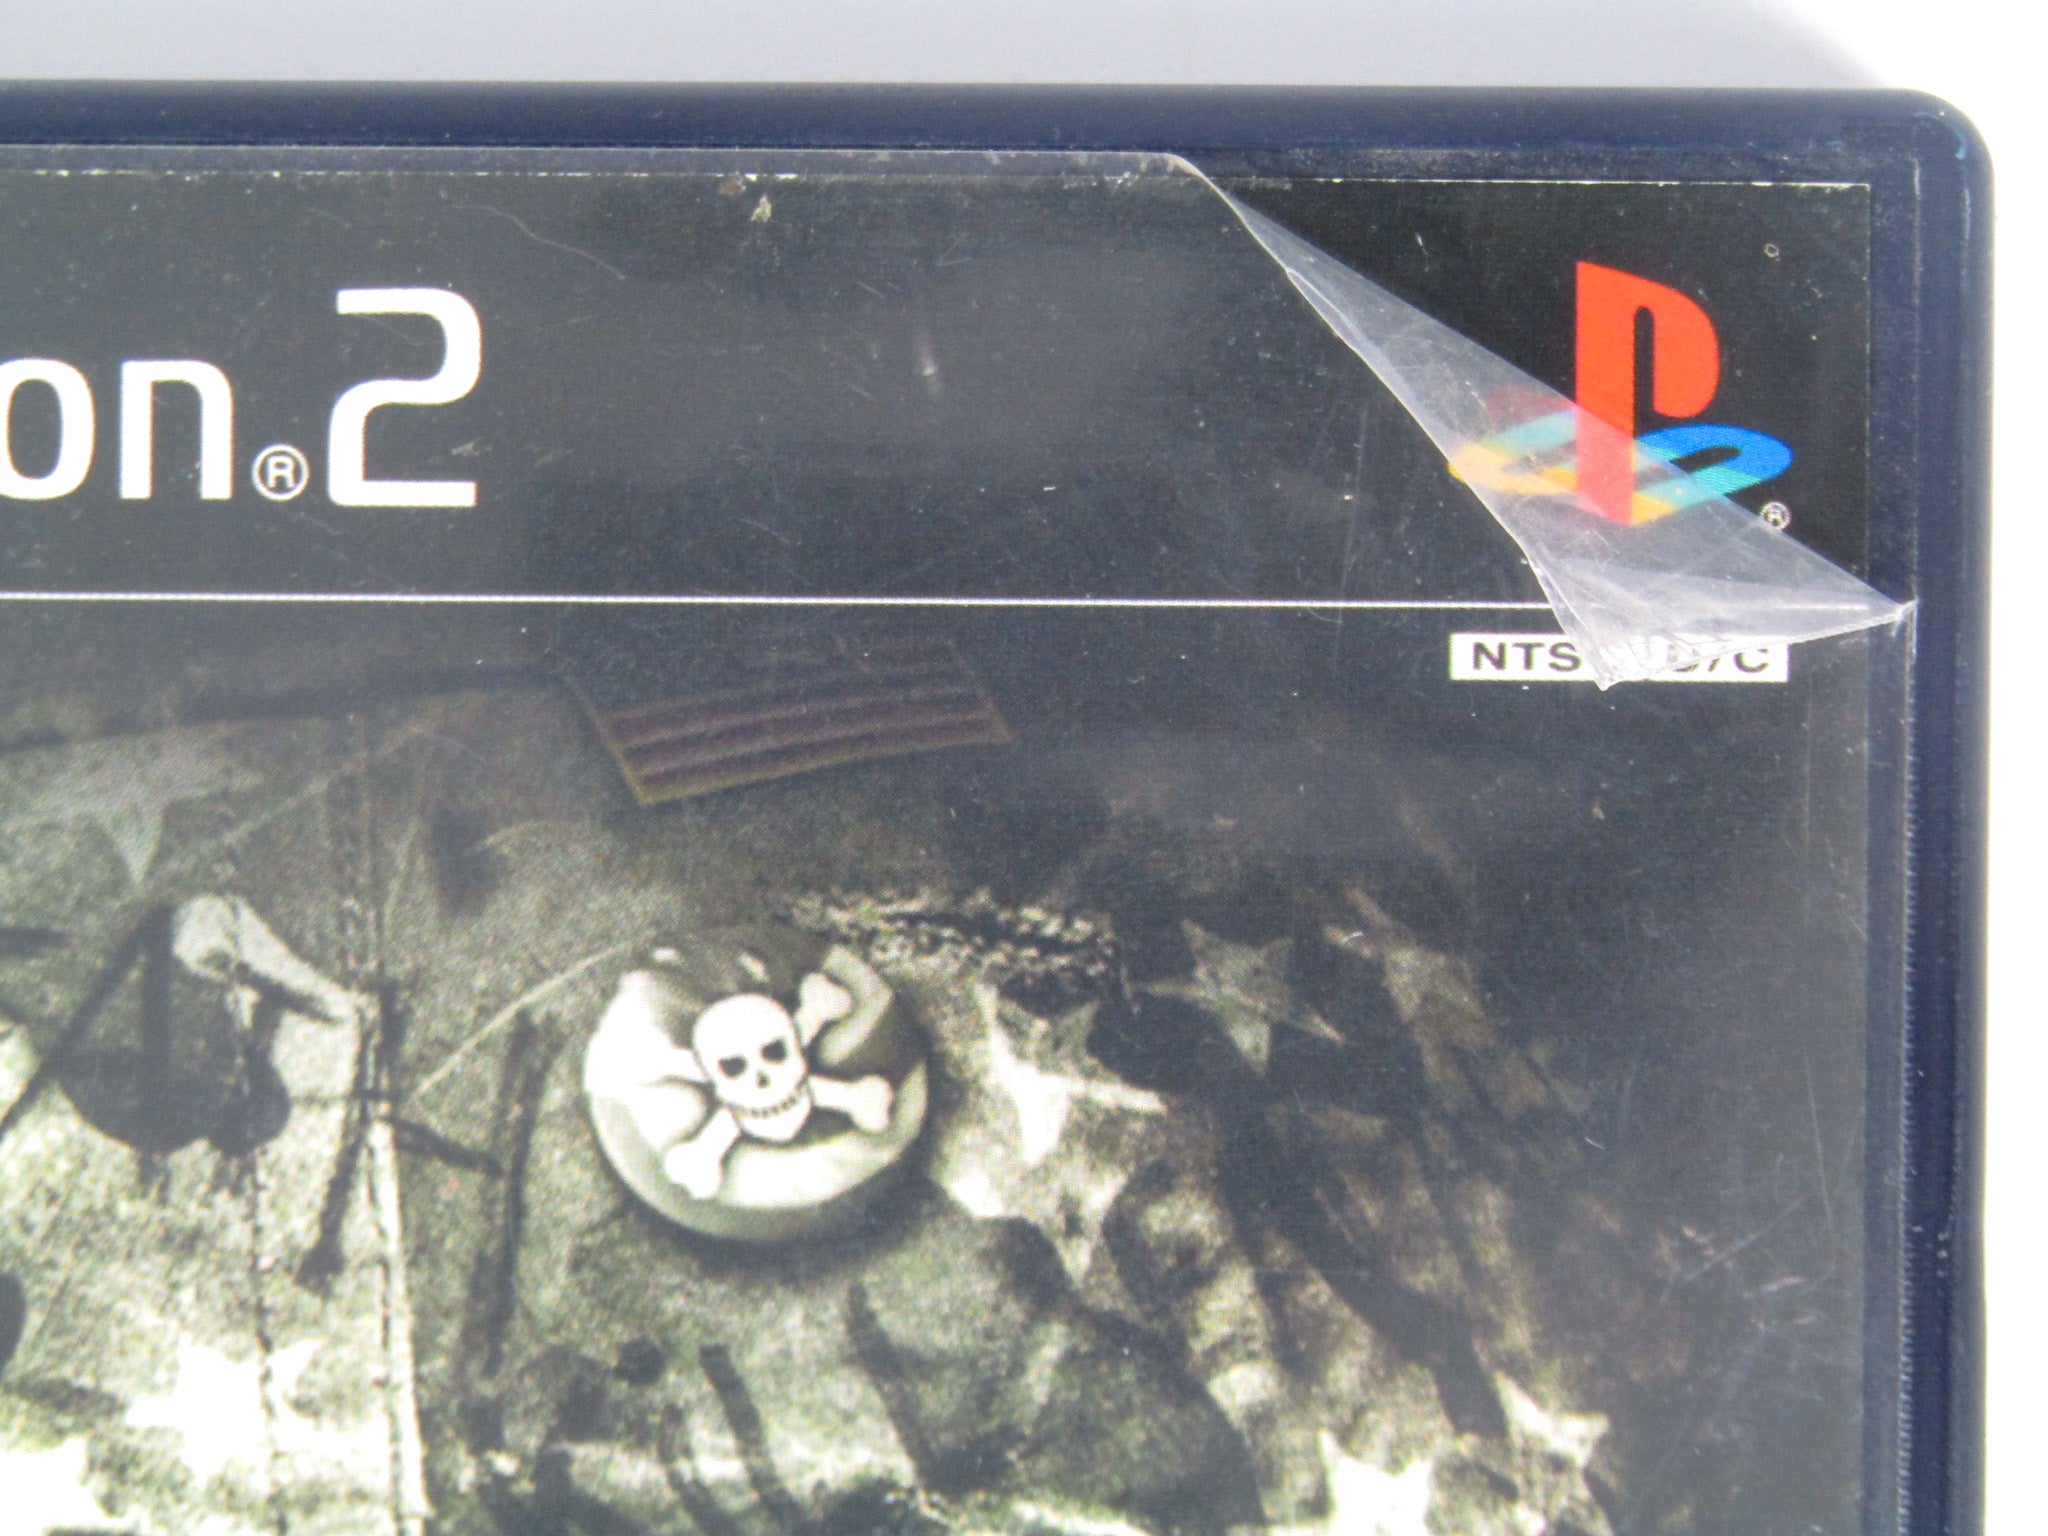 ShellShock: Nam '67 (PS2) (PlayStation), Used, 5032921020688